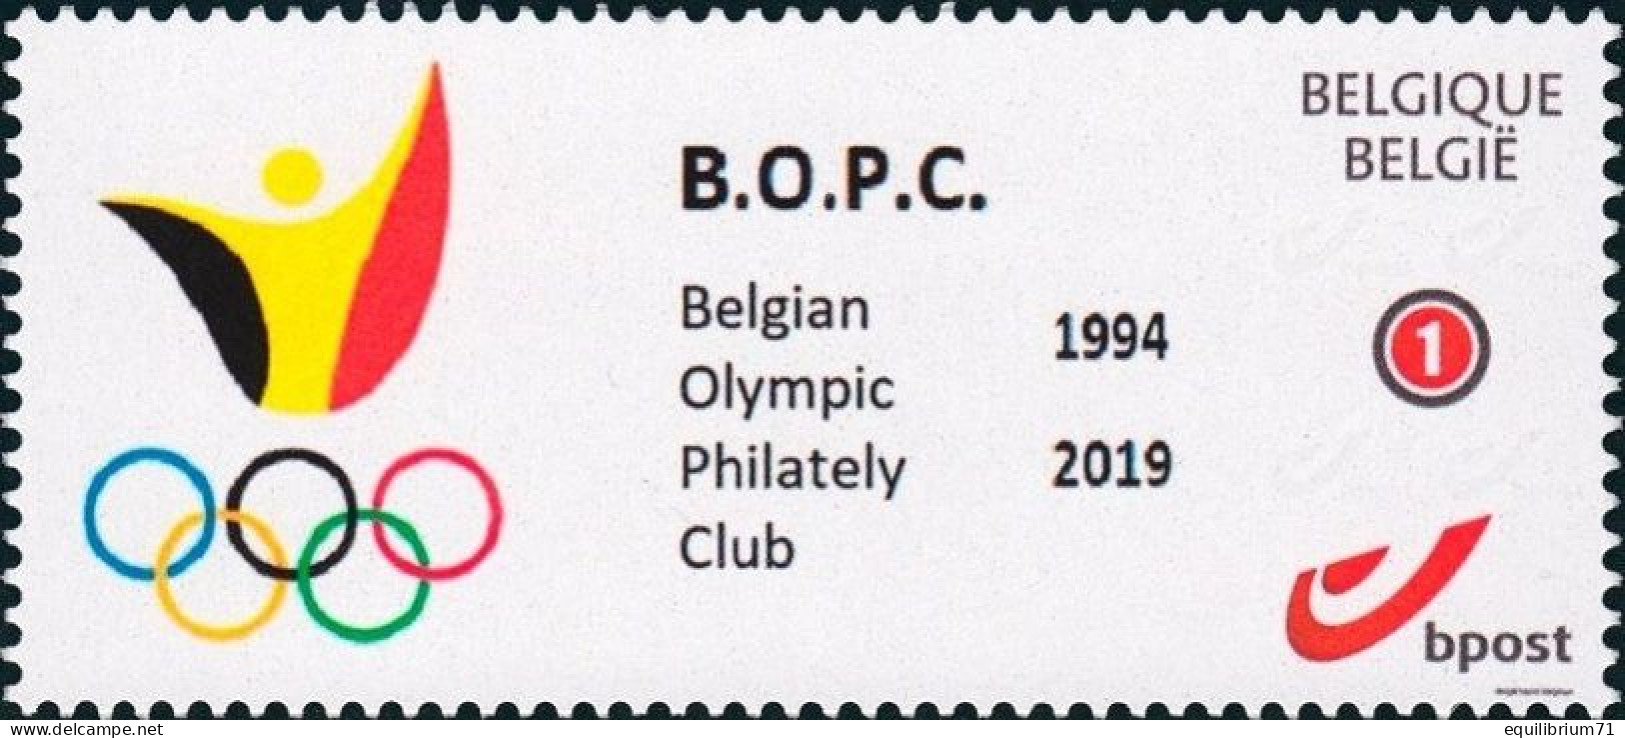 DUOSTAMP** / MYSTAMP** - Belgian Olympic Philately Club - BOPC - 25j / 25a - 1994-2019 - Sommer 2020: Tokio